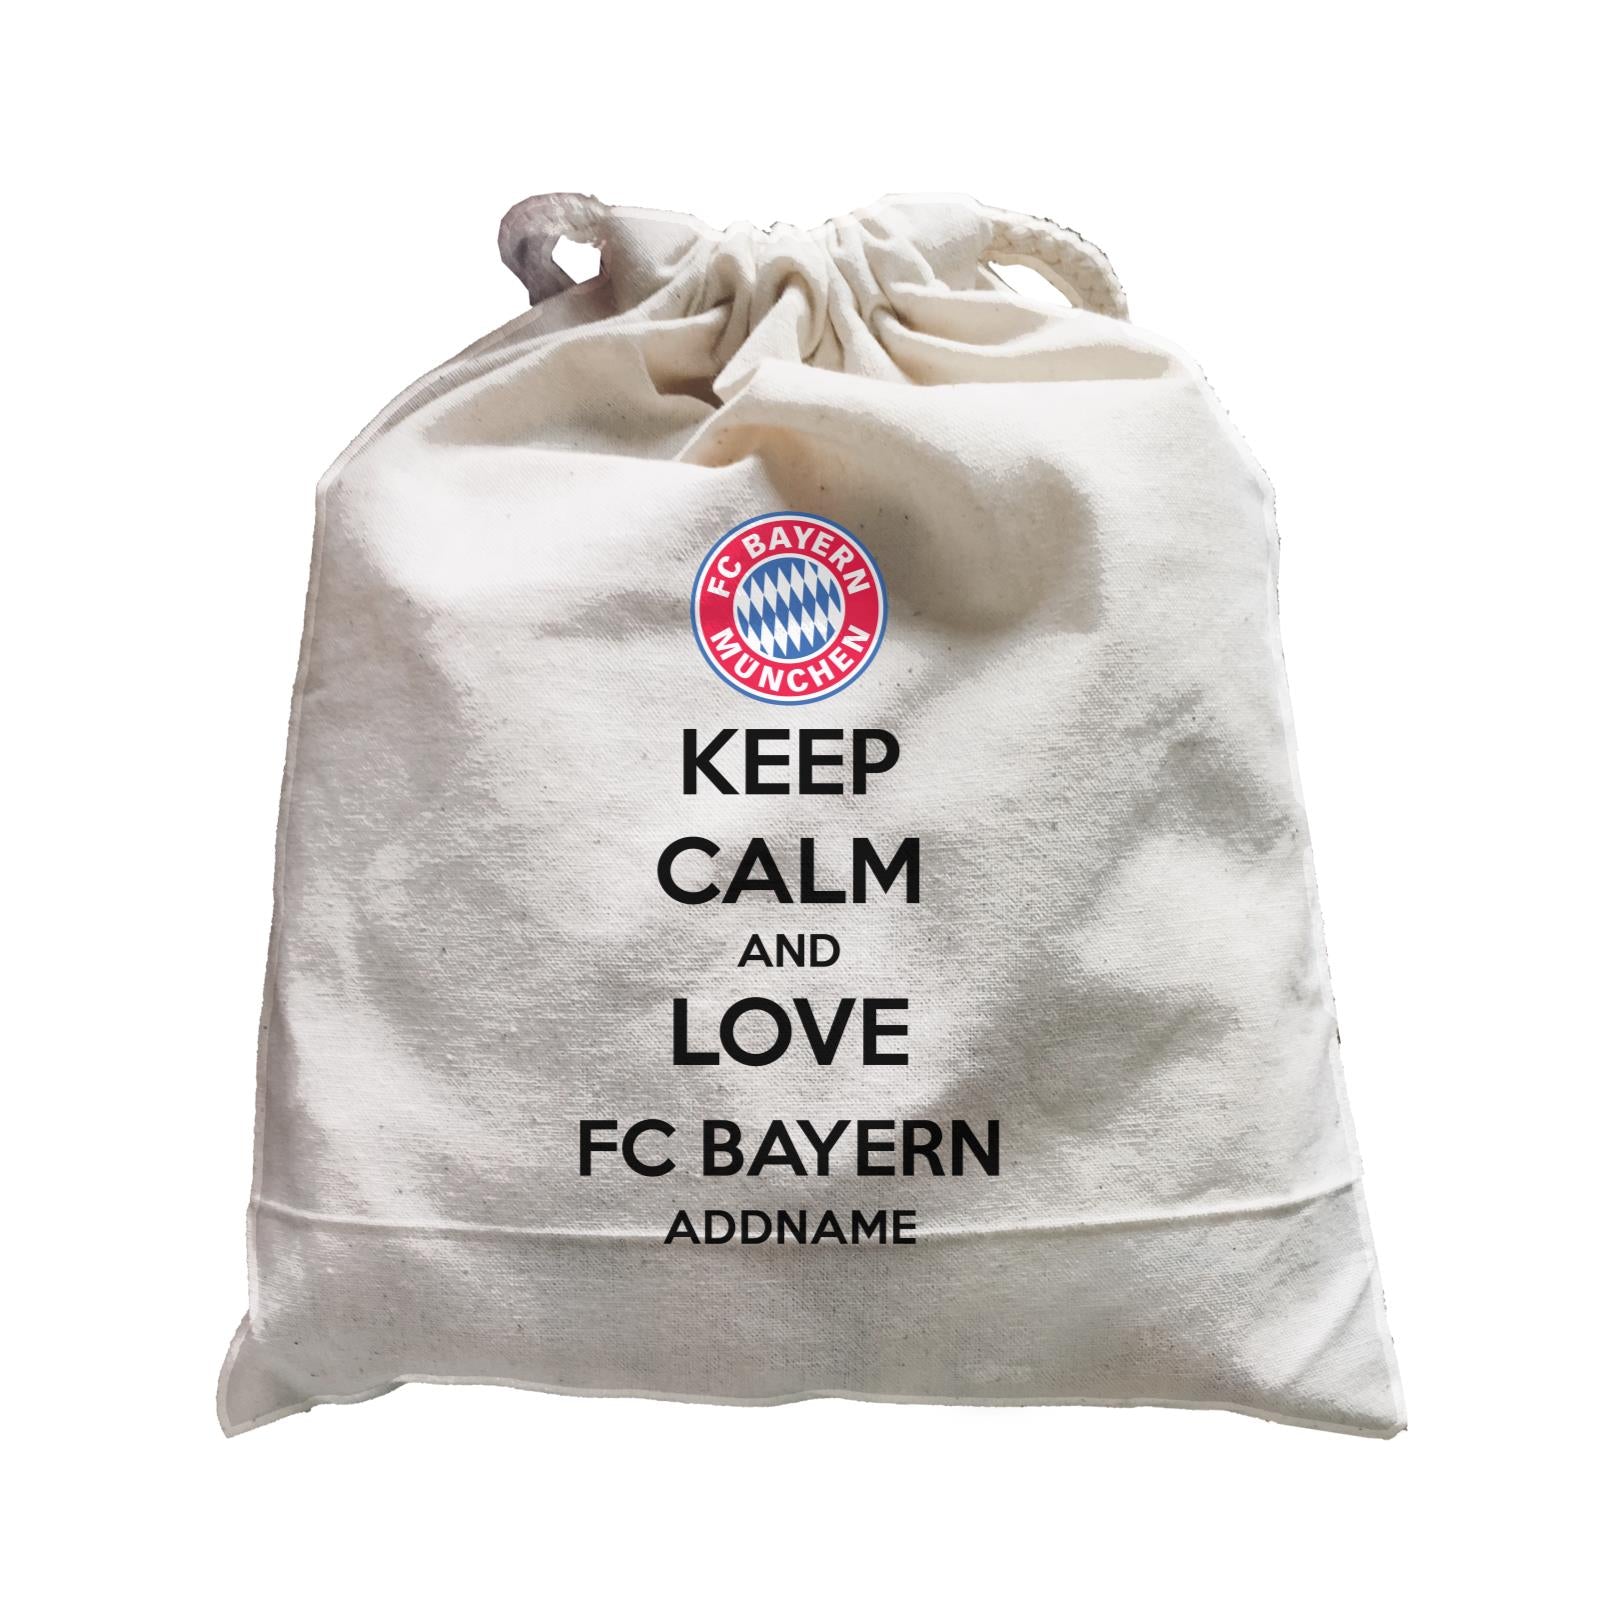 FC Bayern Football Keep Calm And Love Series Addname Satchel